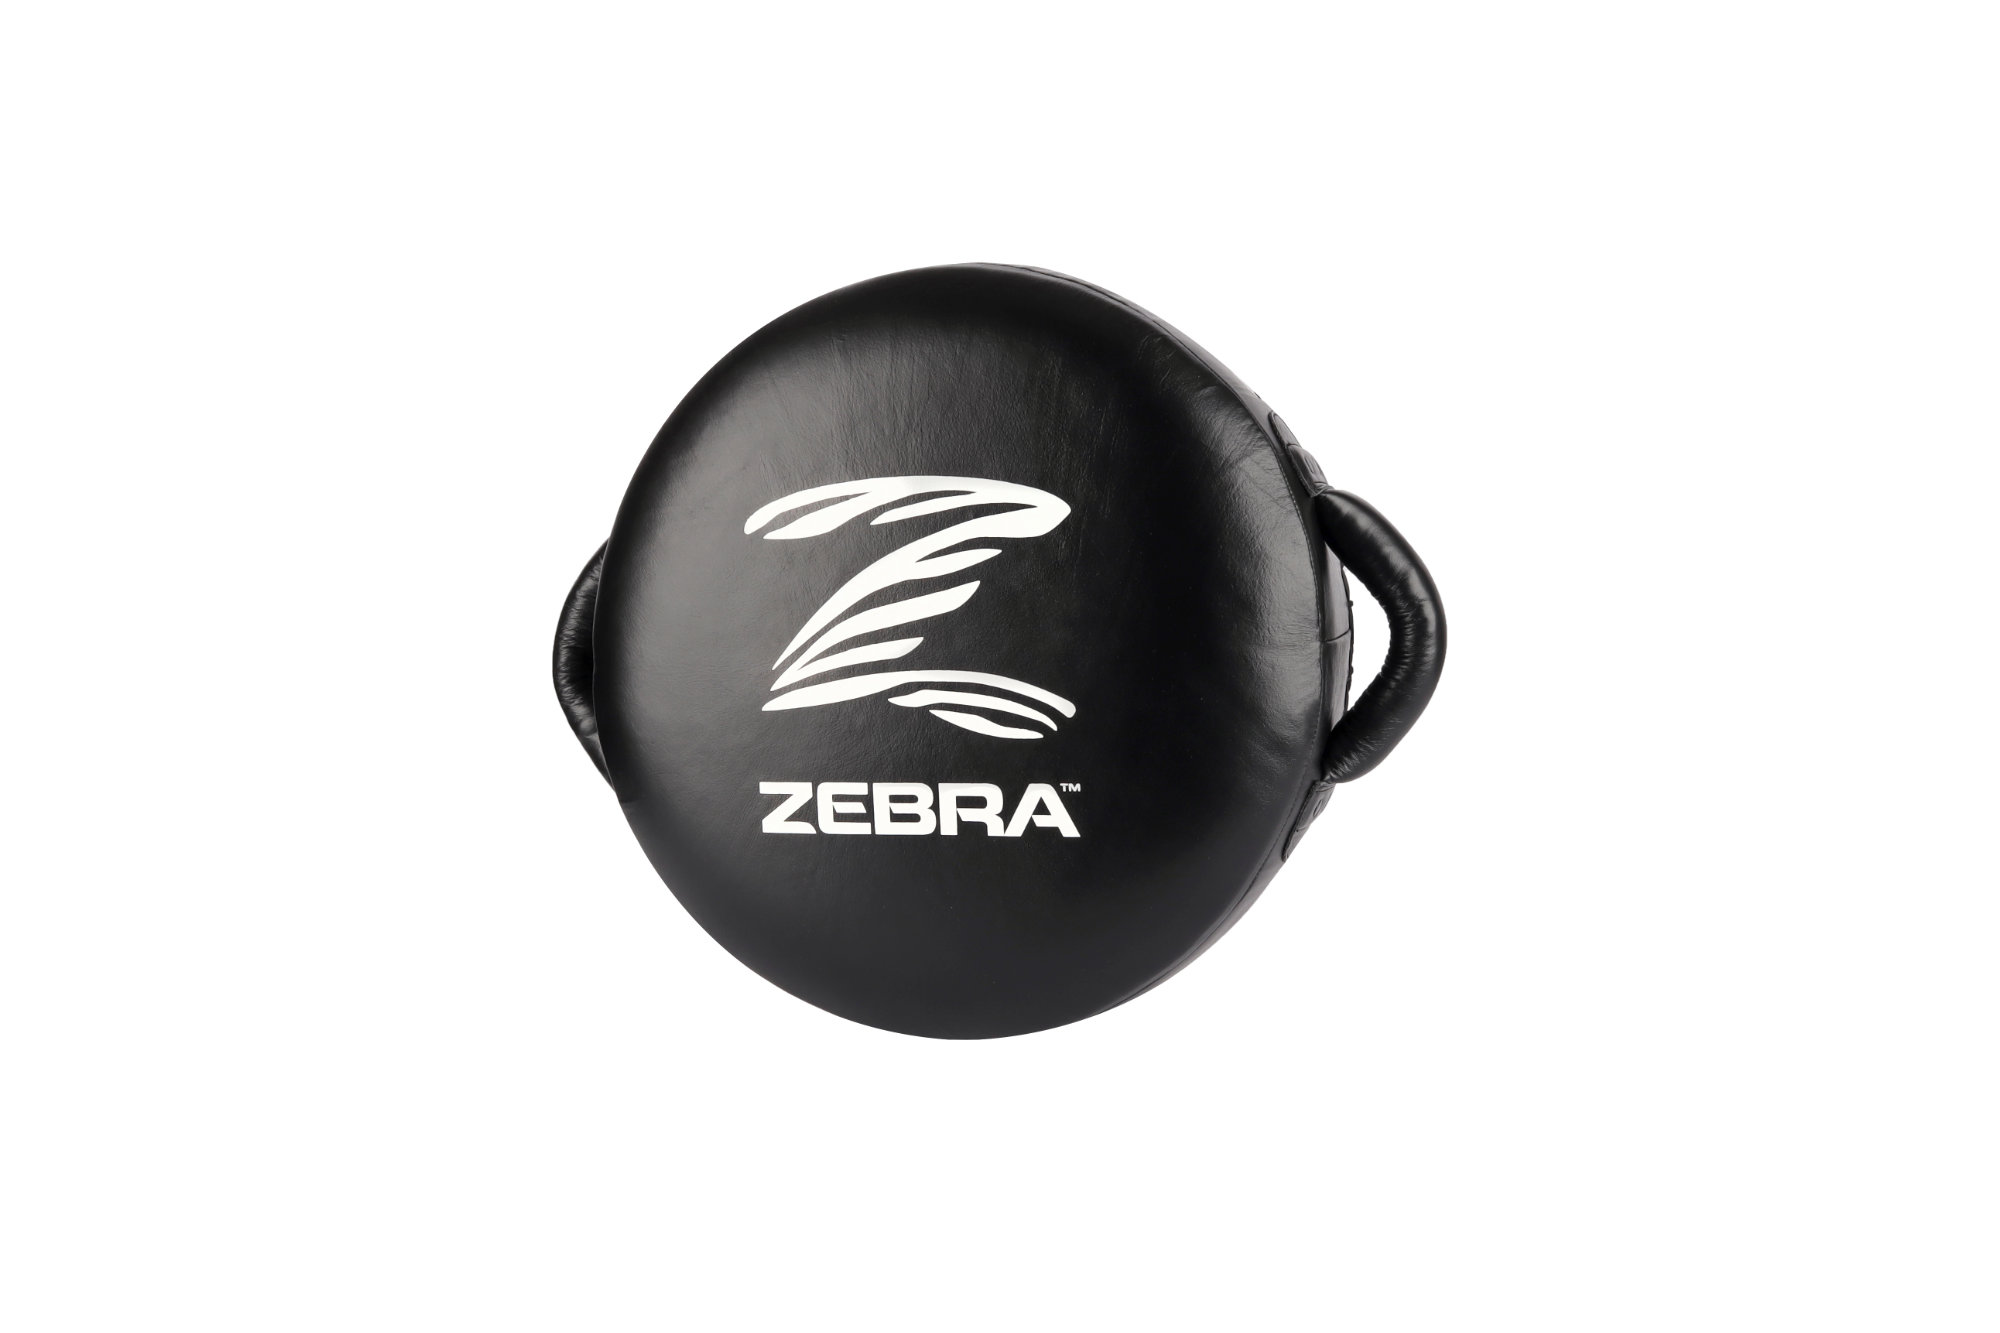 ZEBRA Pro big round pad front view image